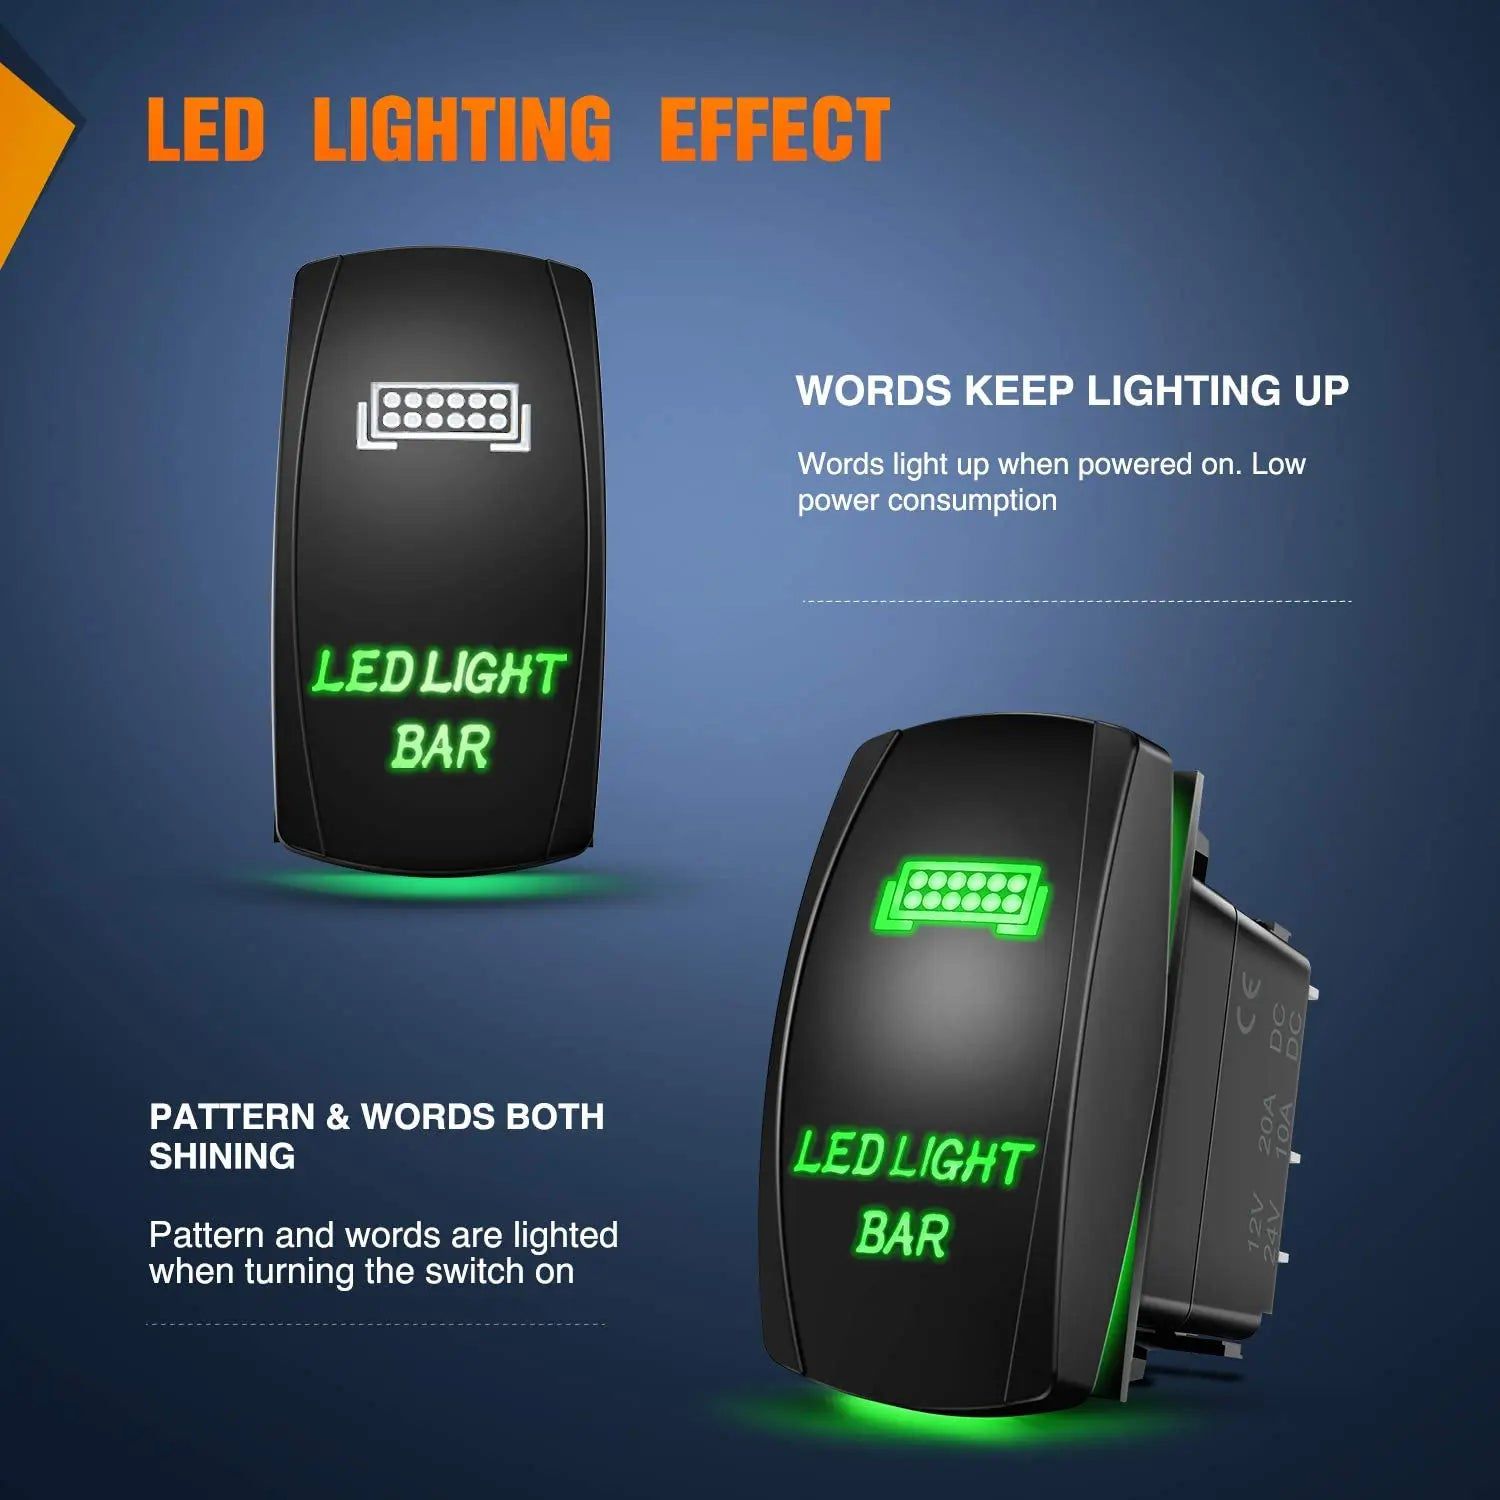 5Pin Laser On/Off LED Light Bar Rocker Switch Green Nilight